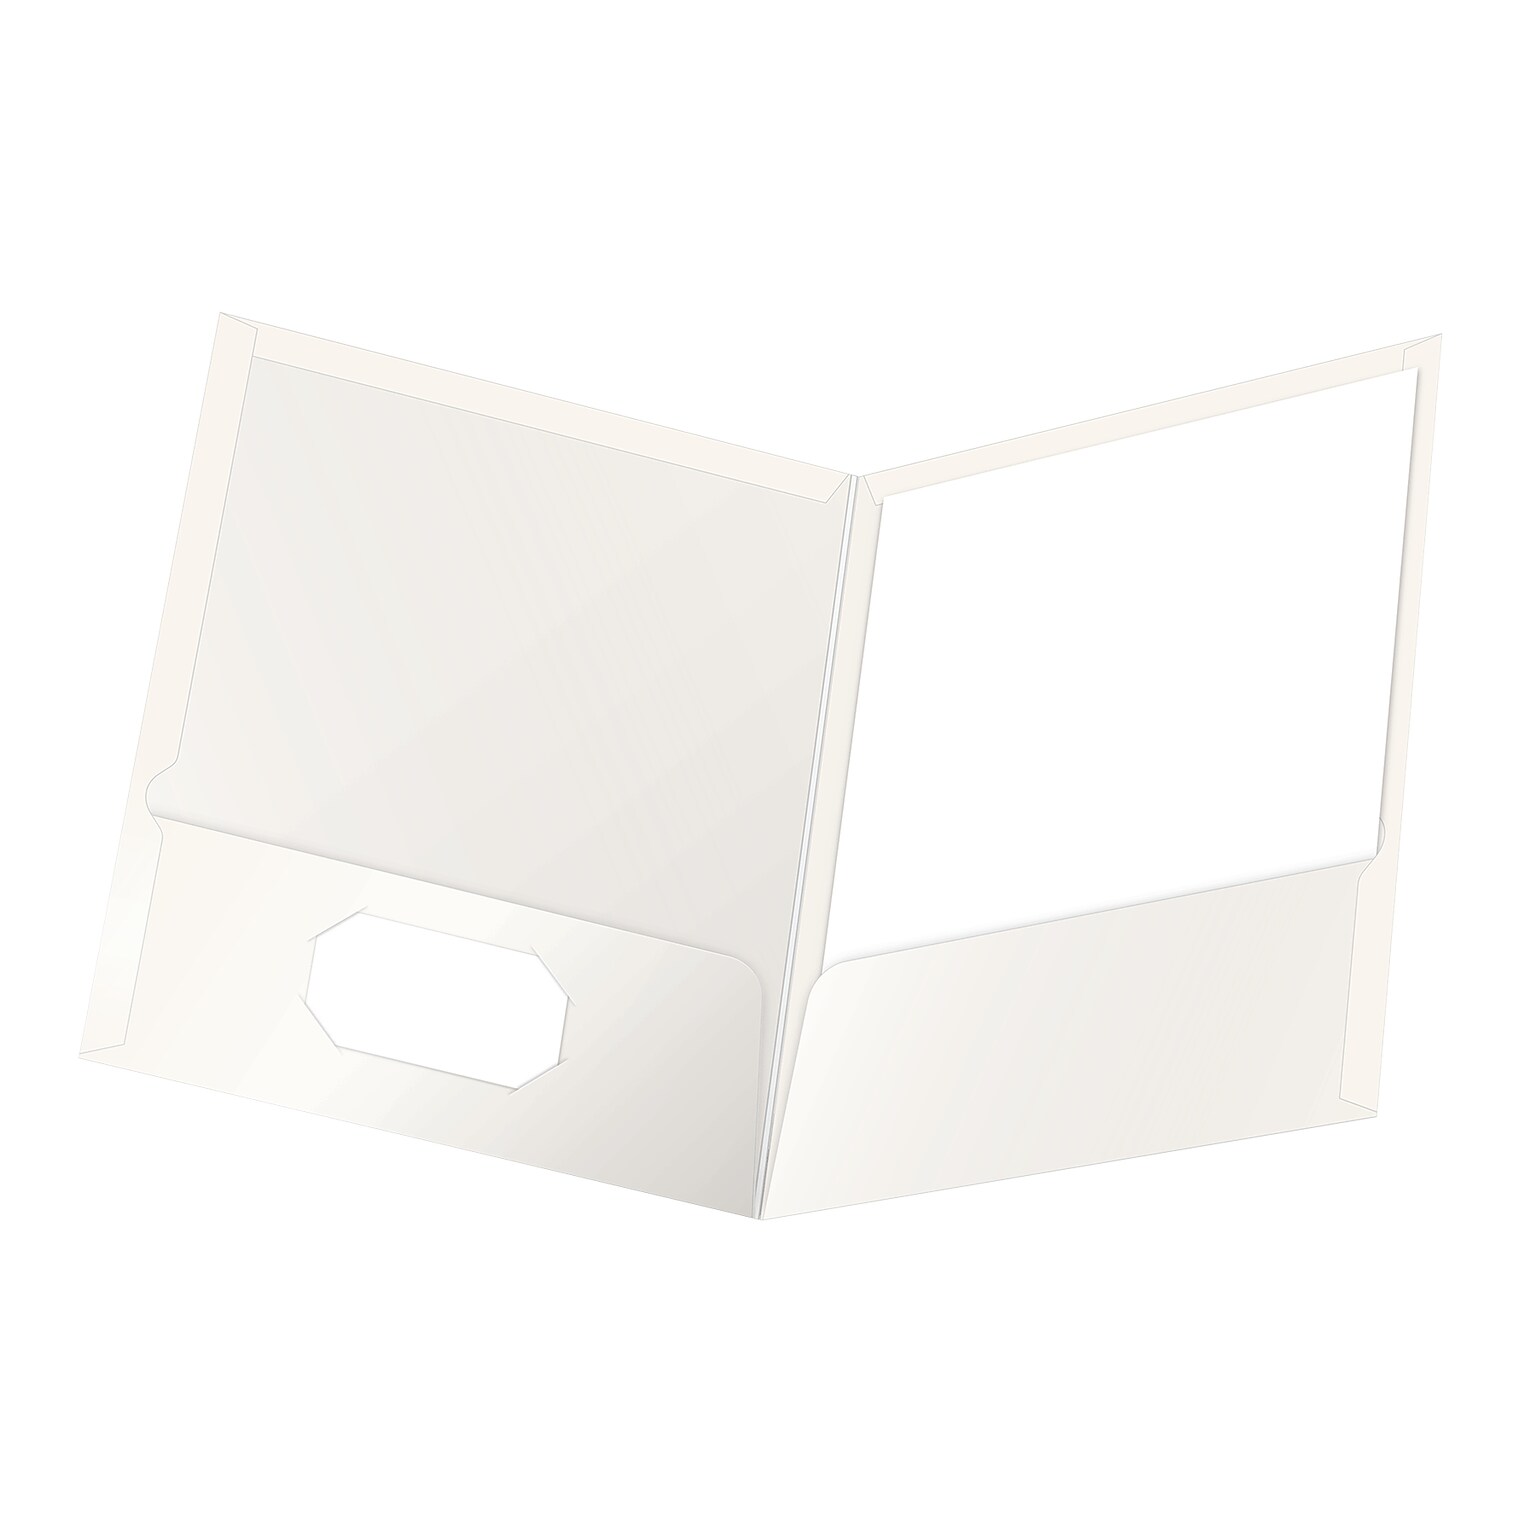 Oxford ShowFolio 2-Pocket Laminated Folders, White, 25/Box (OXF 51704)